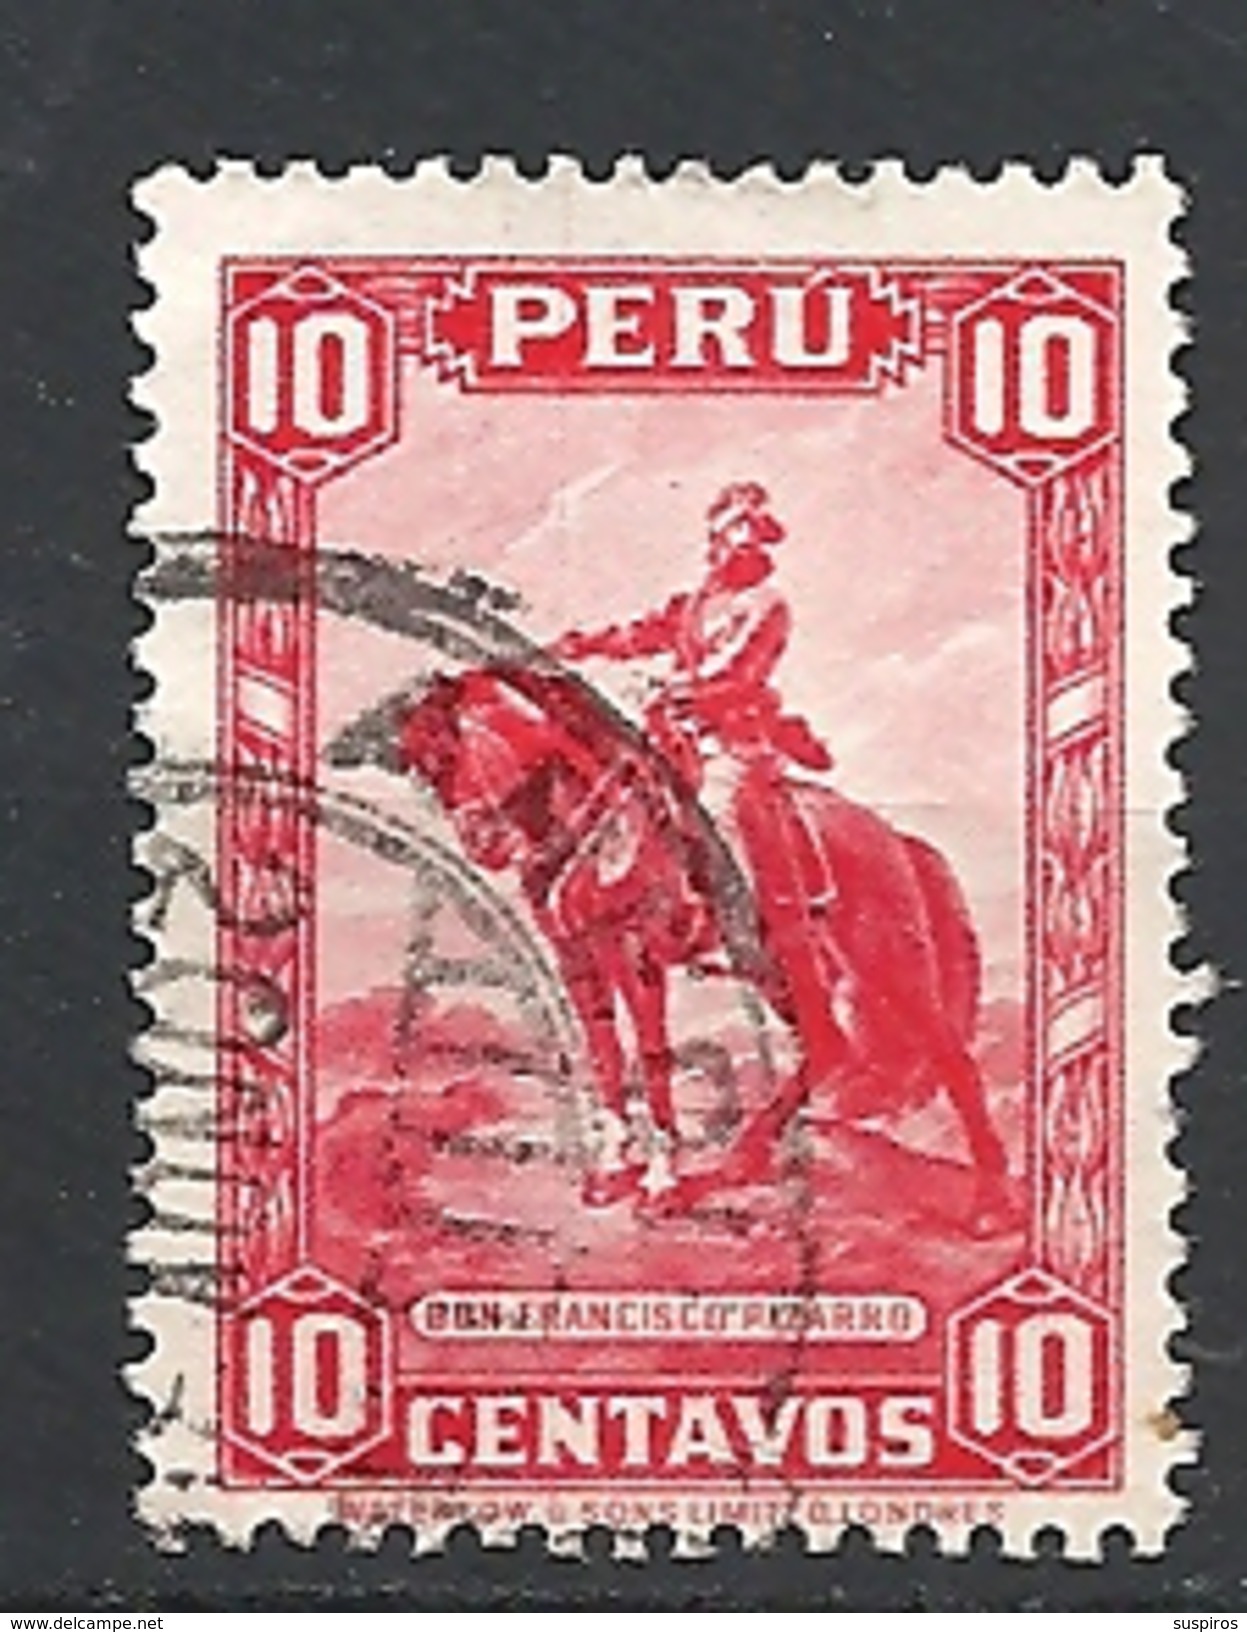 PERU    1934 Postage Stamps      USED  "Francisco Pizzaro" - Painting BY HERNANDEZ - Perú